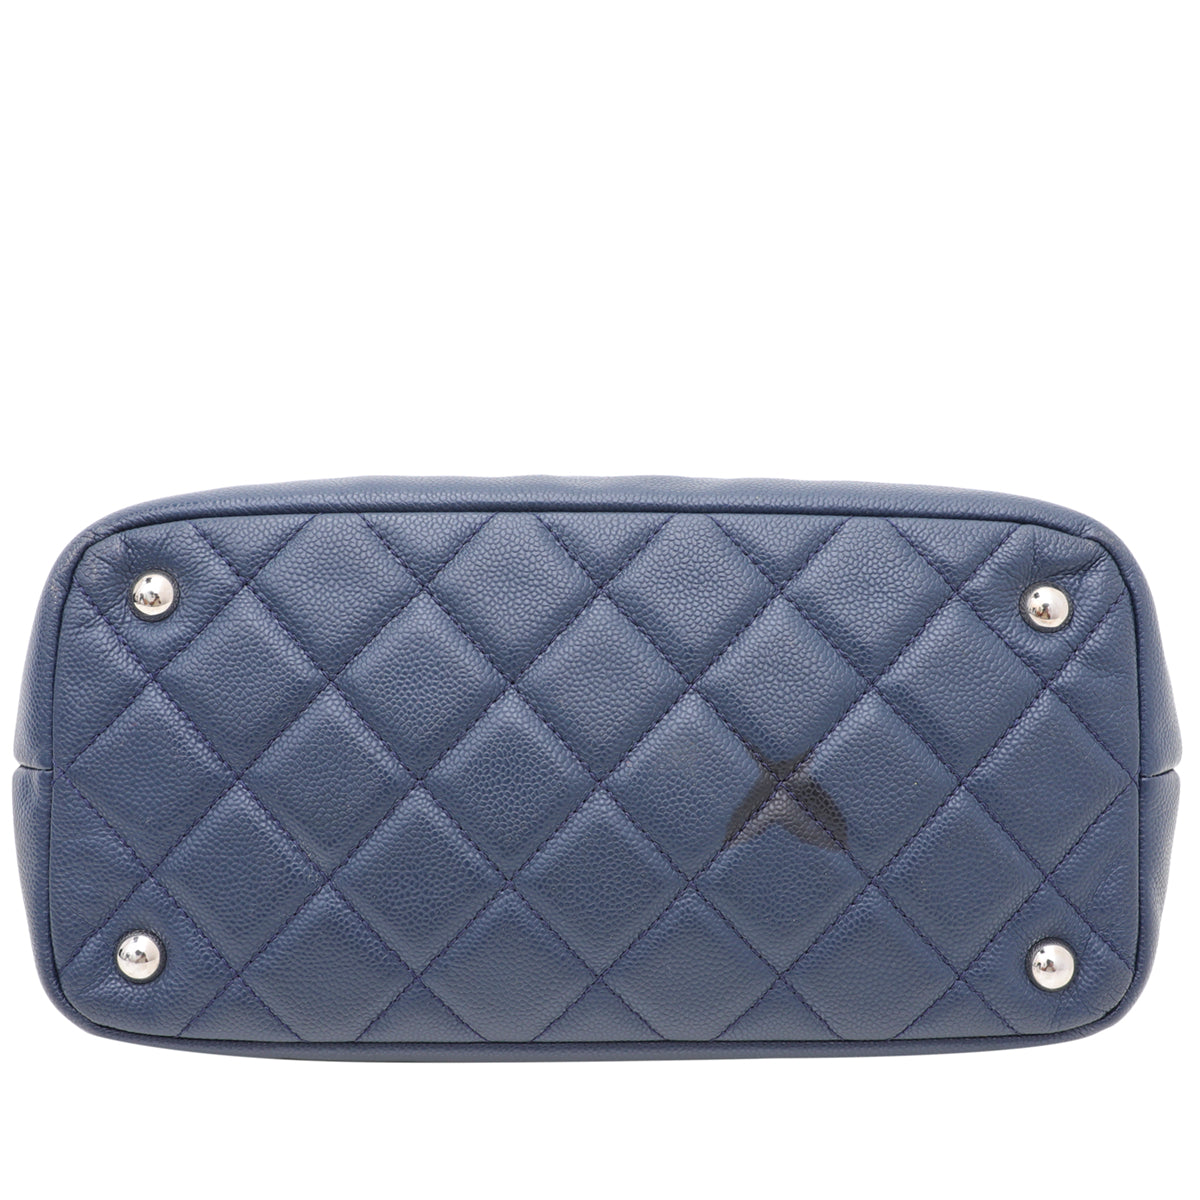 Chanel Navy Blue GST Timeless Shopping Bag